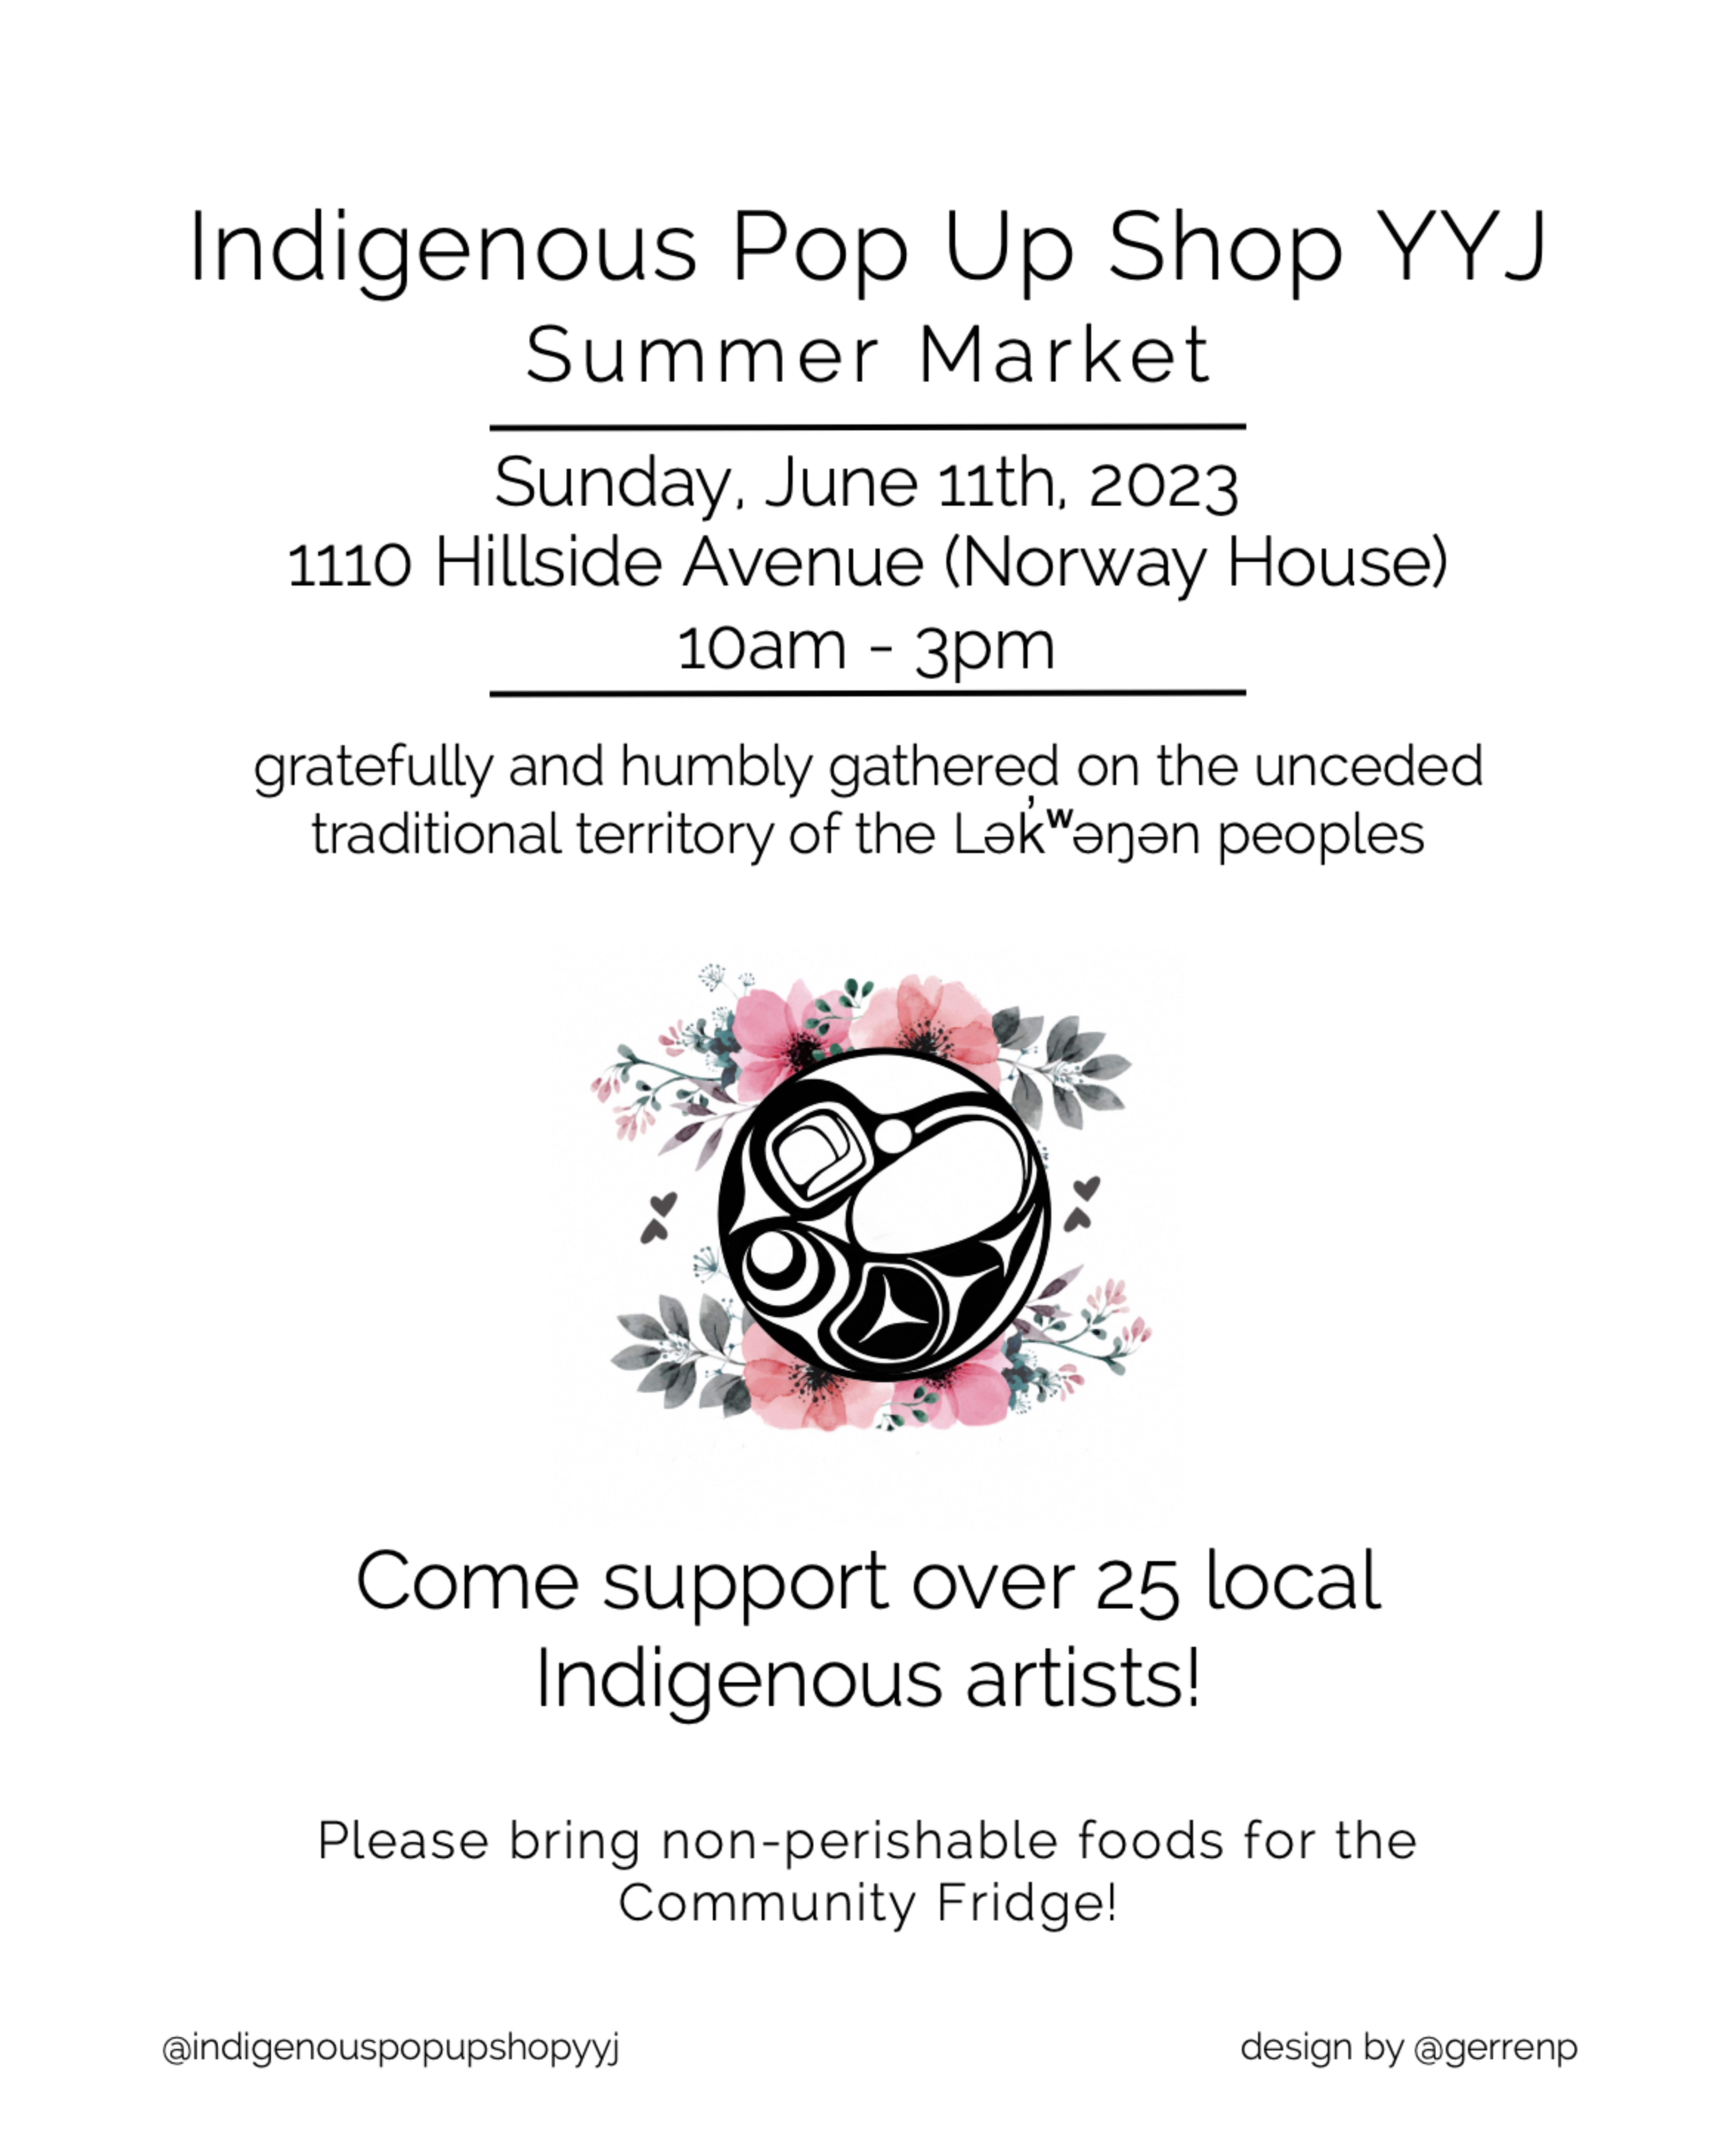 indigenous pop up shop yyj June 11th 2023market